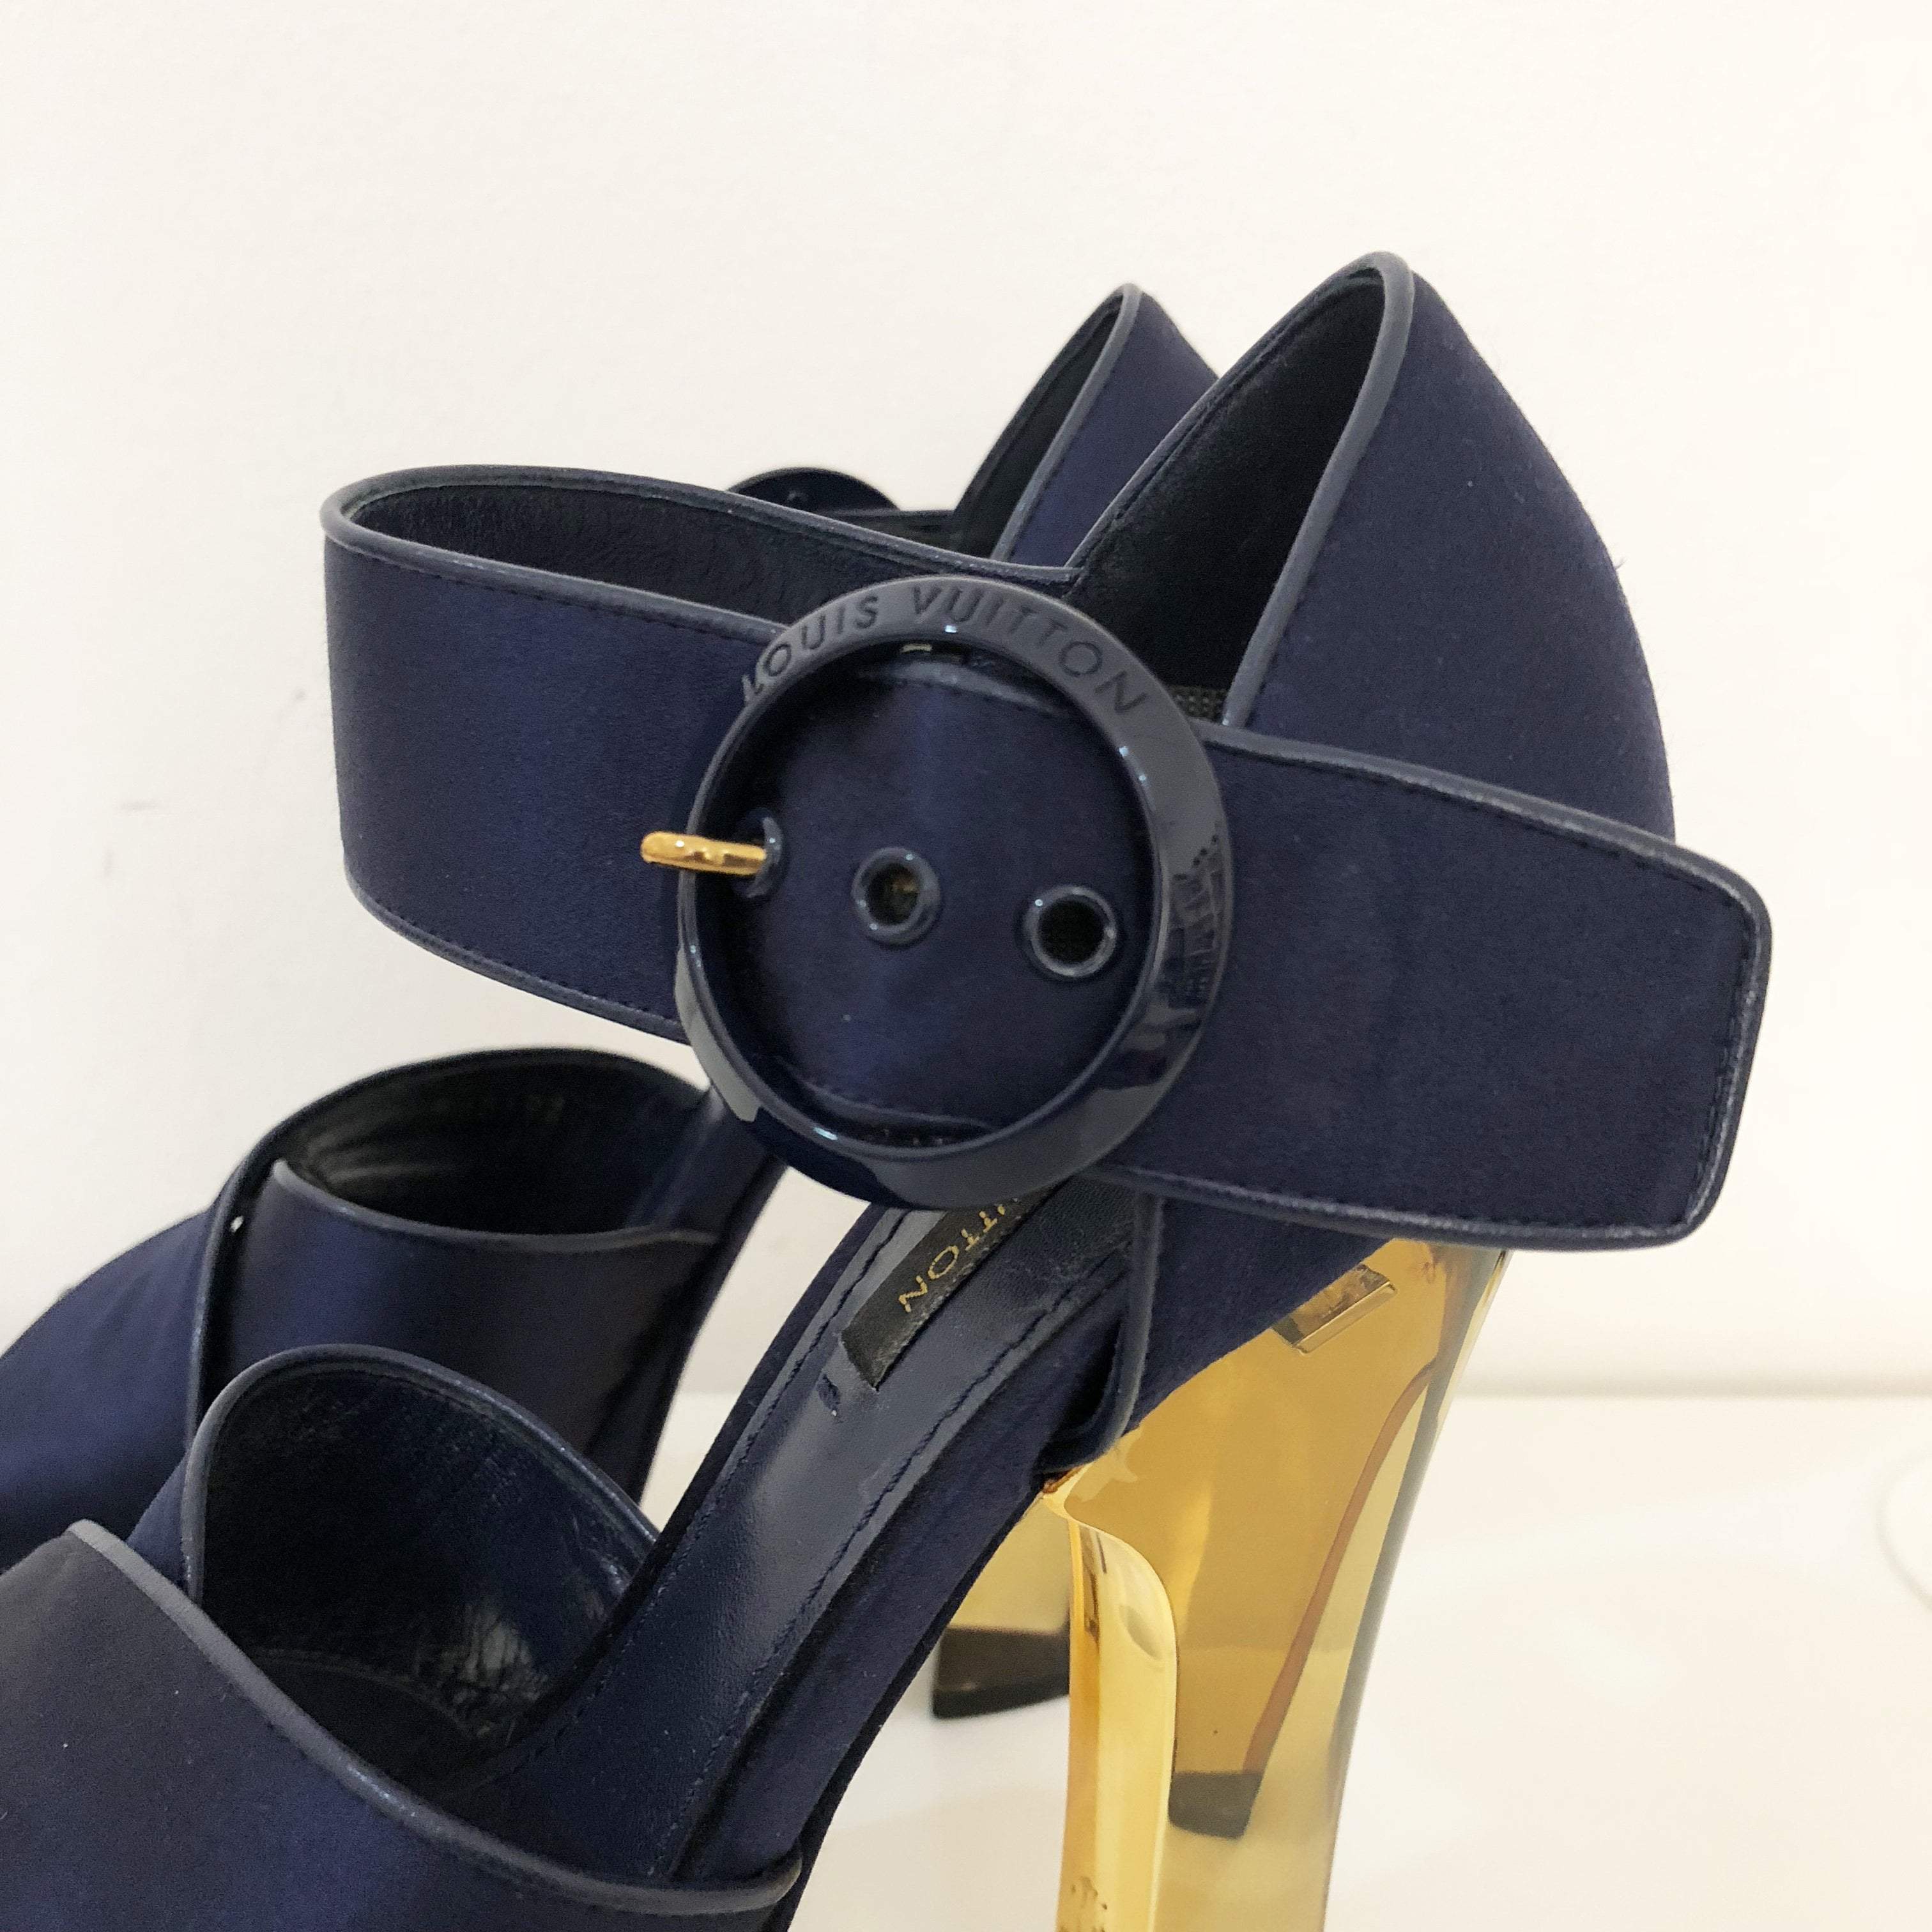 Louis Vuitton Florida Plexiglass Heel Satin Platform Sandals – Garderobe